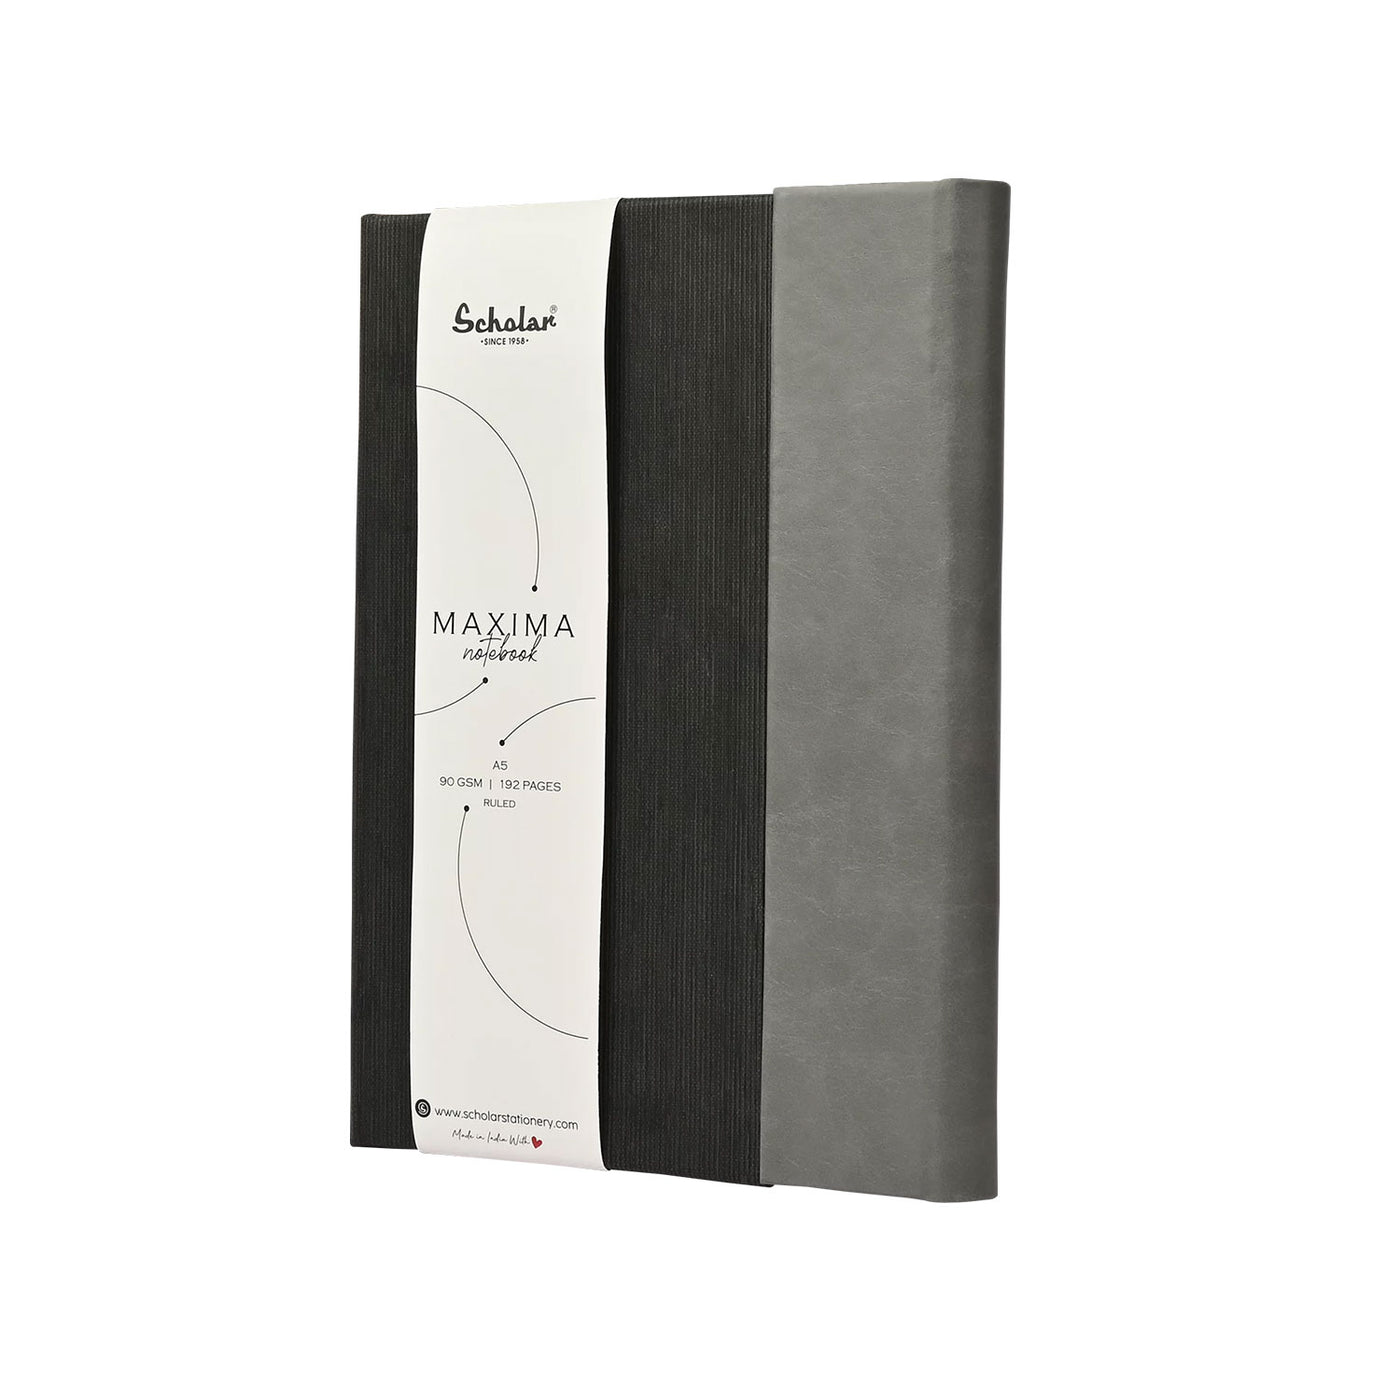 Scholar Maxima Black Notebook - A5 Ruled 2